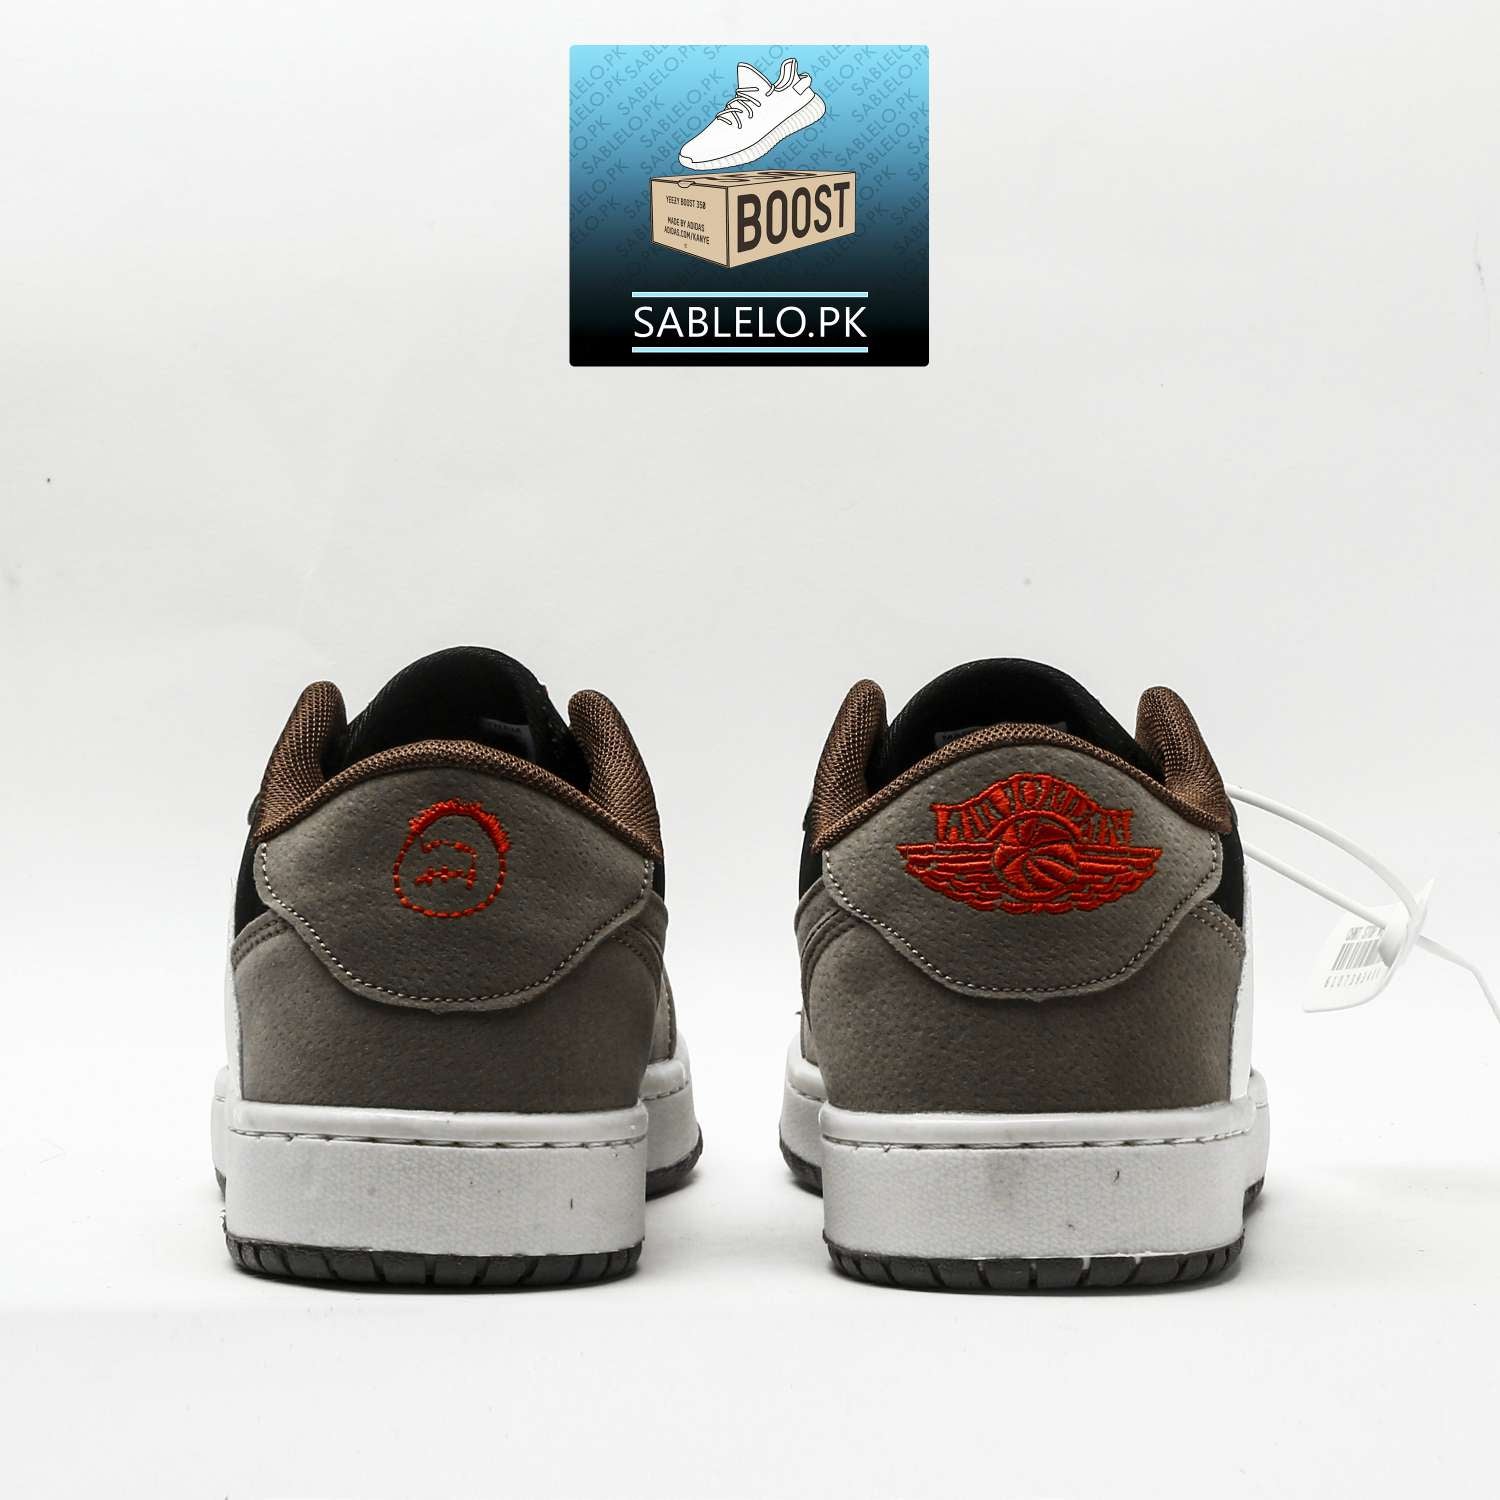 Jordan low top Travis scot brown - Premium Shoes from perfectshop - Just Rs.4499! Shop now at Sablelo.pk